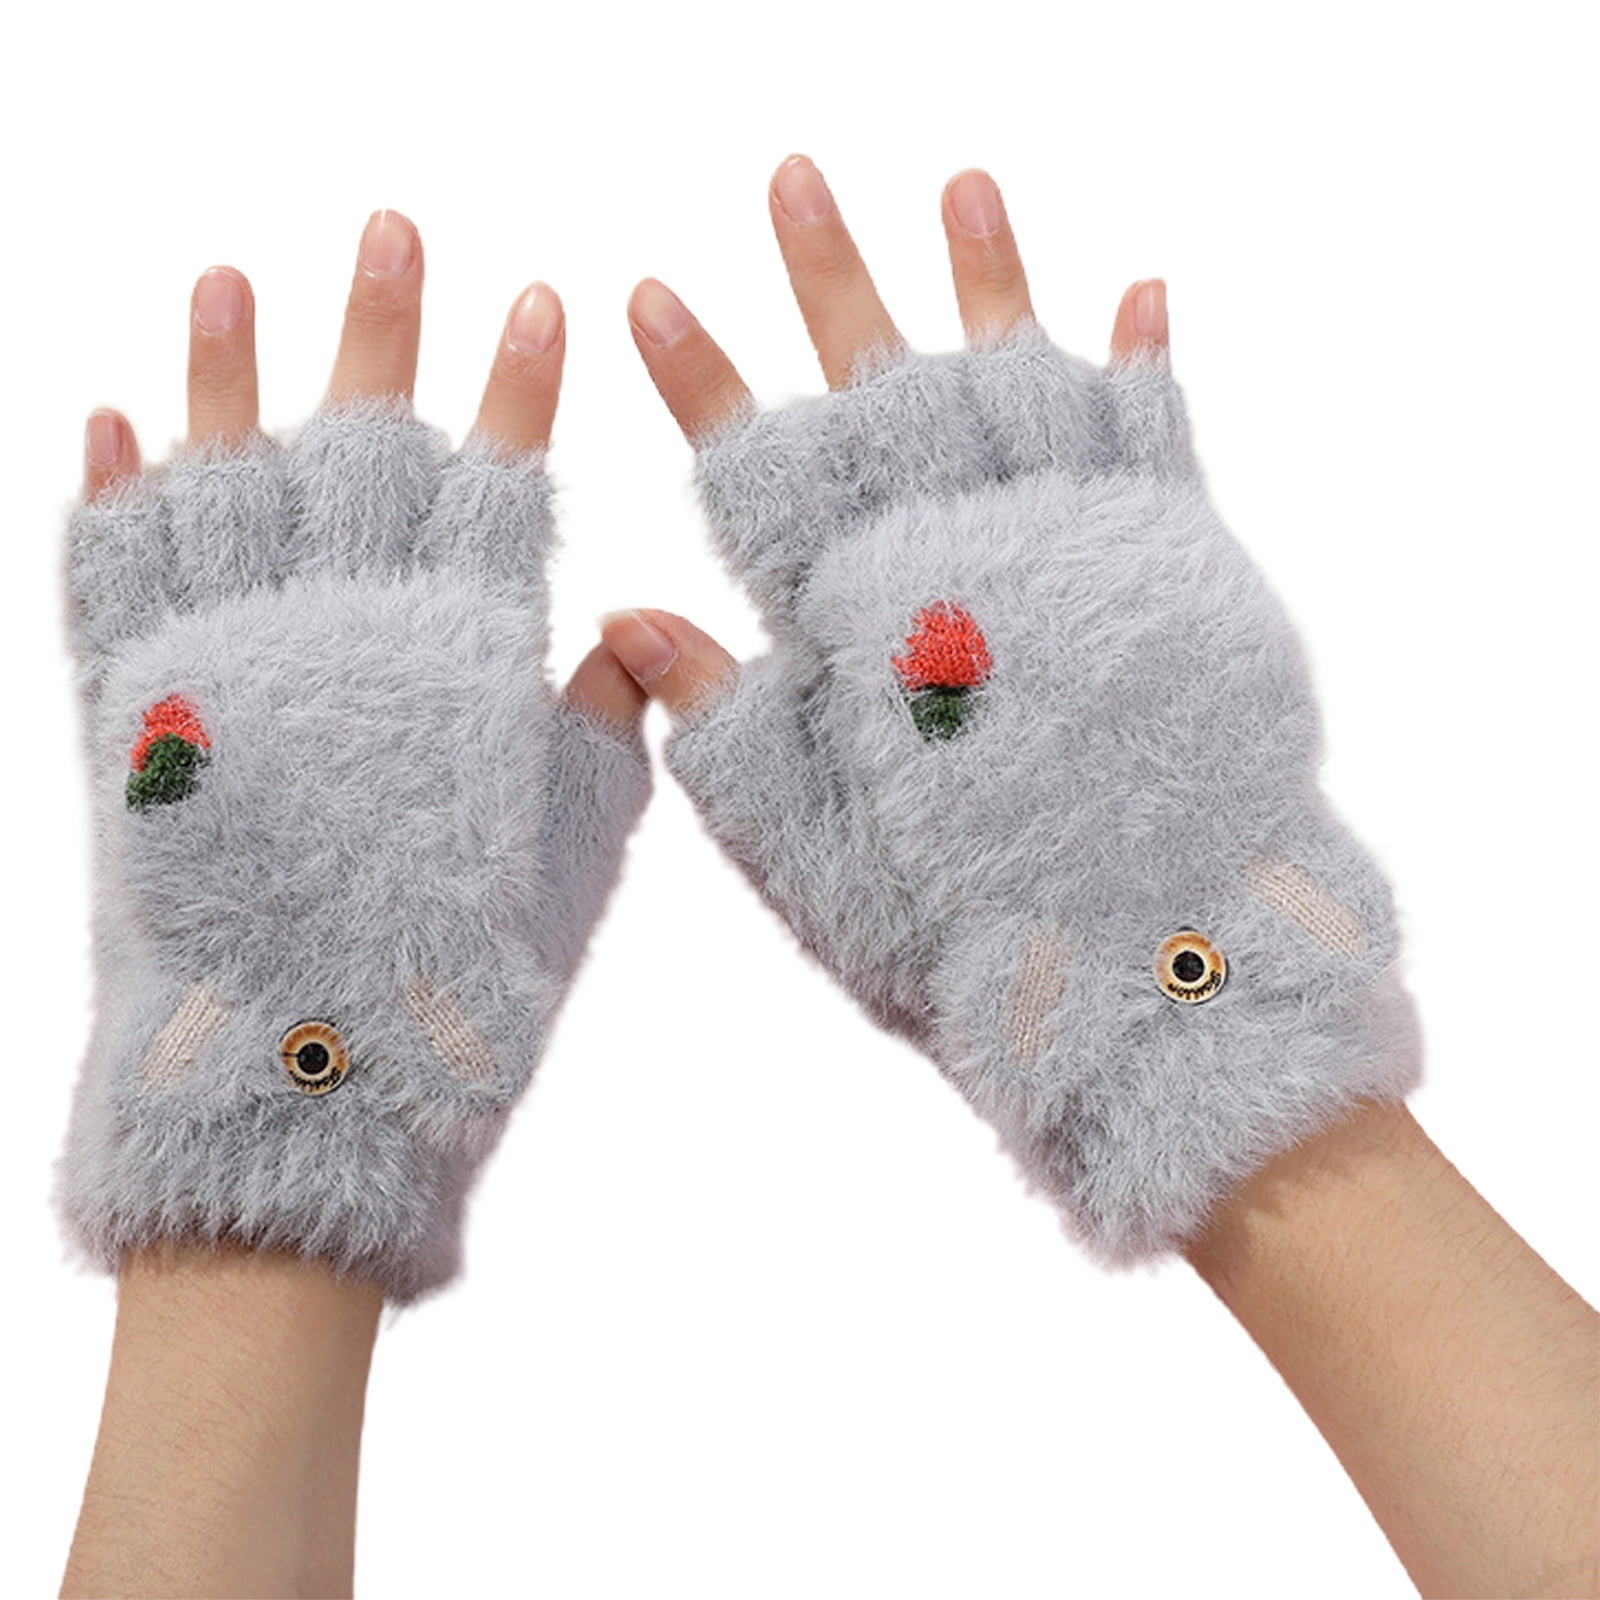 Hot Hand Warmers Bonus Free Fleece Gloves Lot Of 8 Pair 